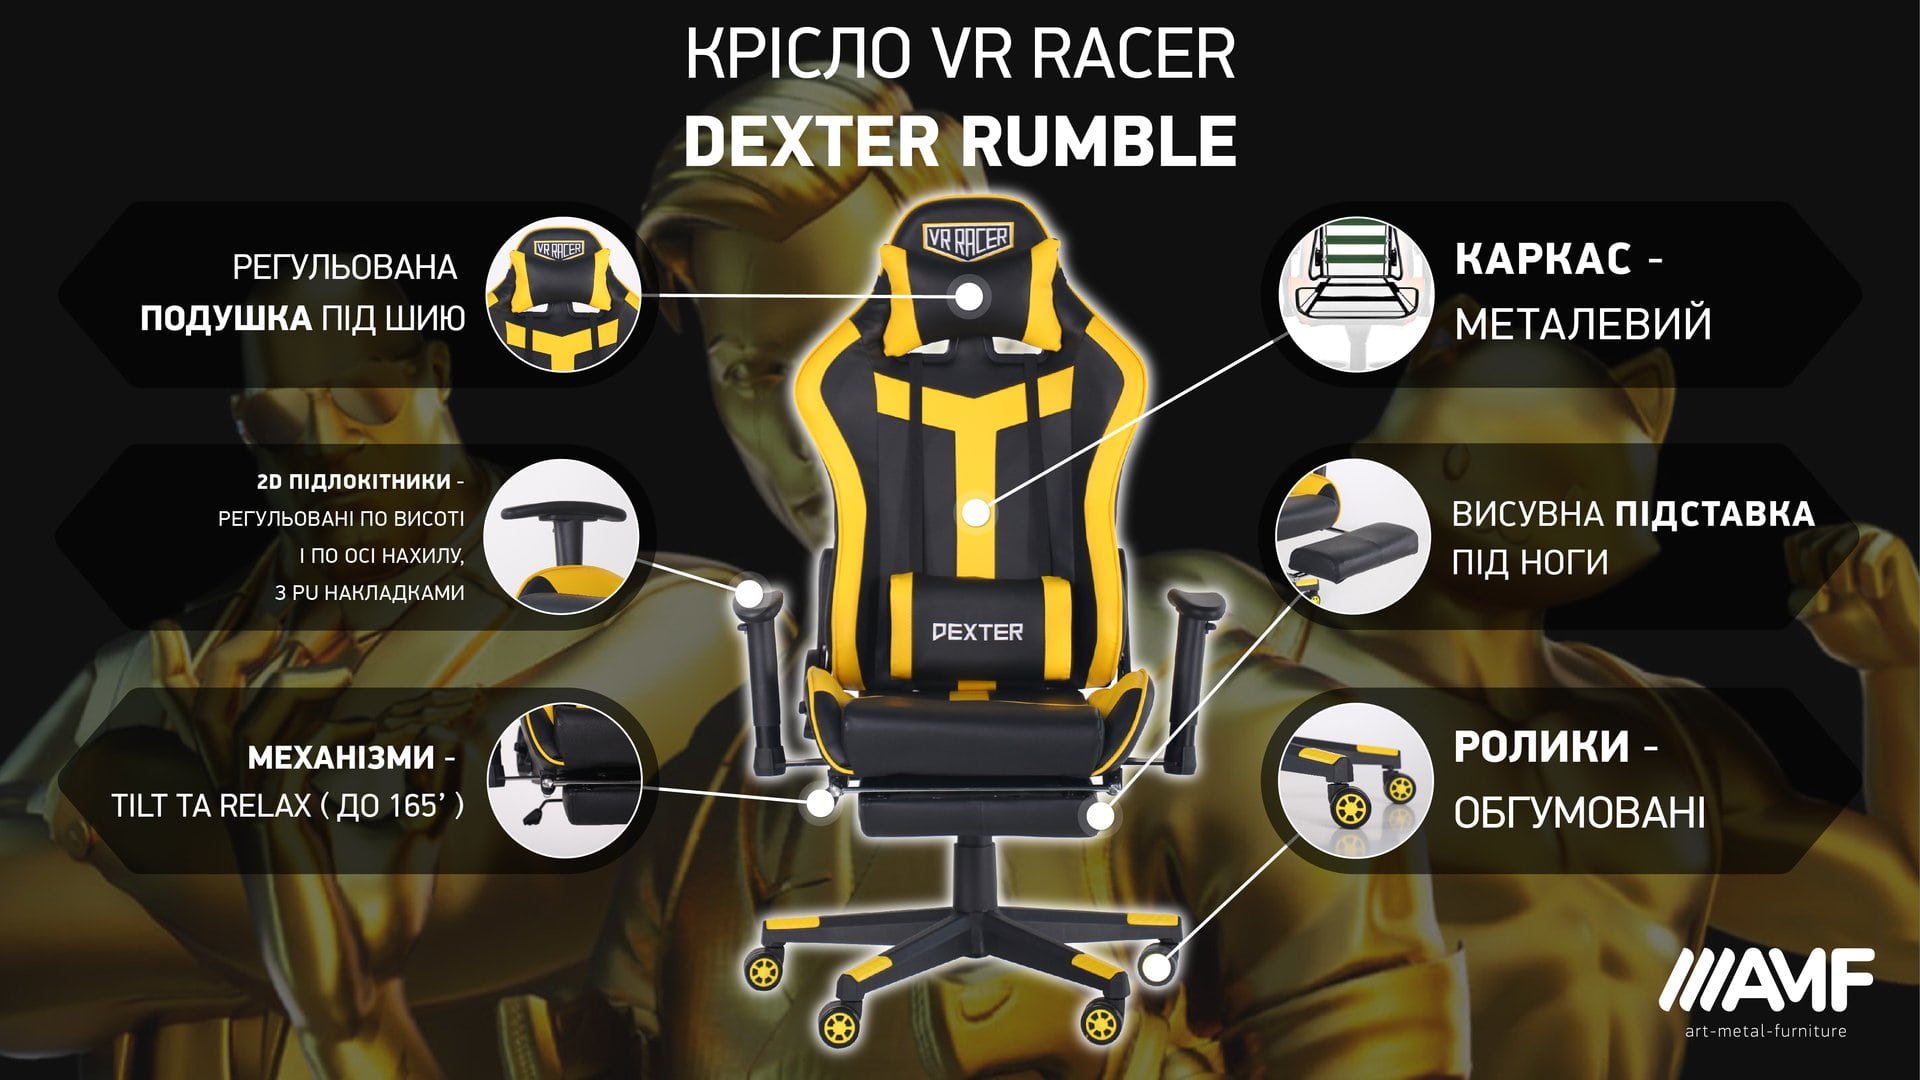 Кресло VR Racer Dexter Rumble описание